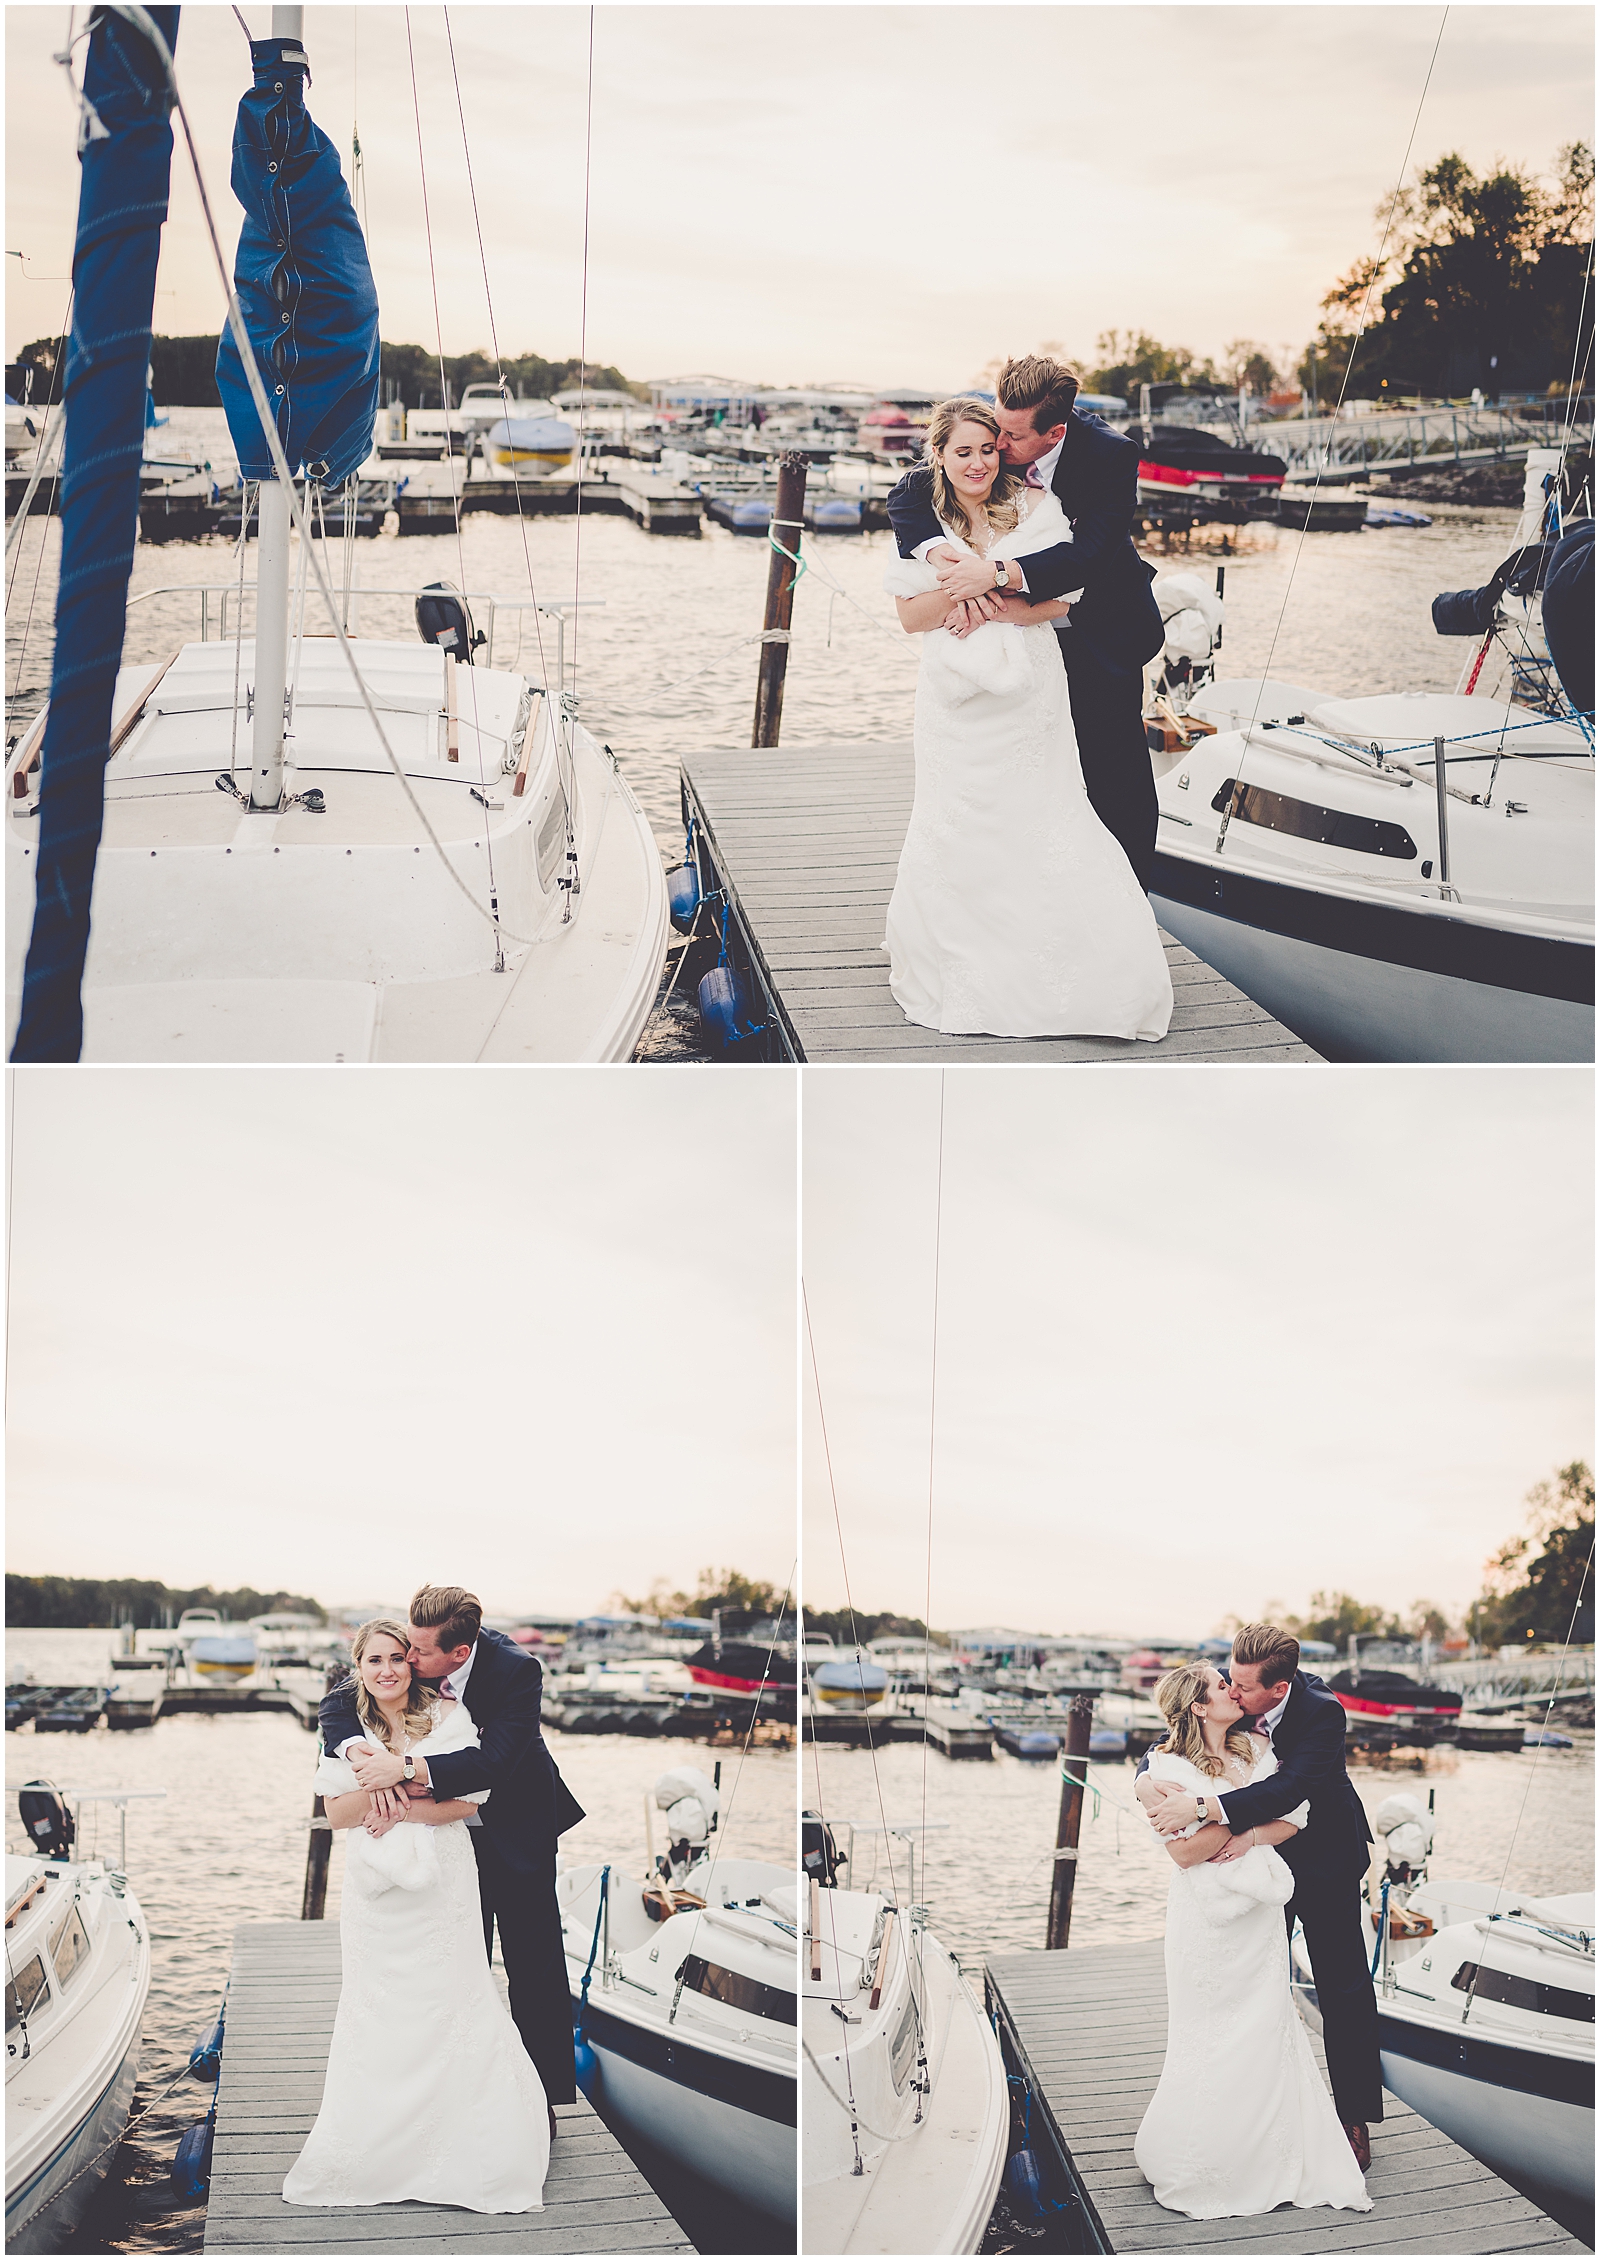 Erin and Matt's fall Island Bay Yacht Club wedding in Springfield with Chicagoland wedding photographer Kara Evans Photographer.